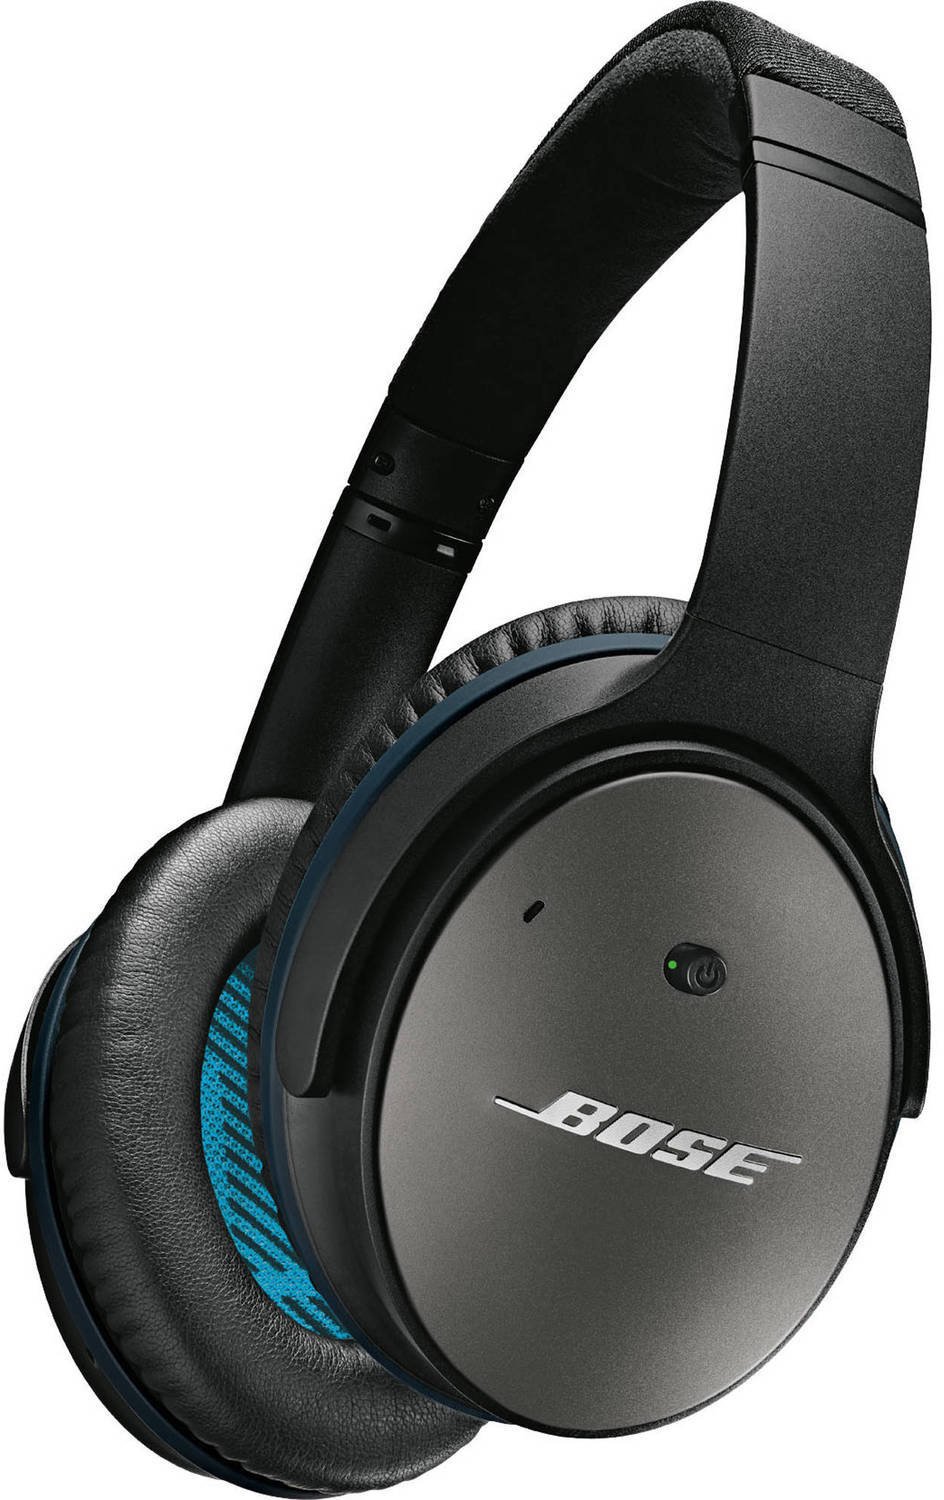 Hör-Sprech-Kombination Bose QuietComfort 25 Android Black